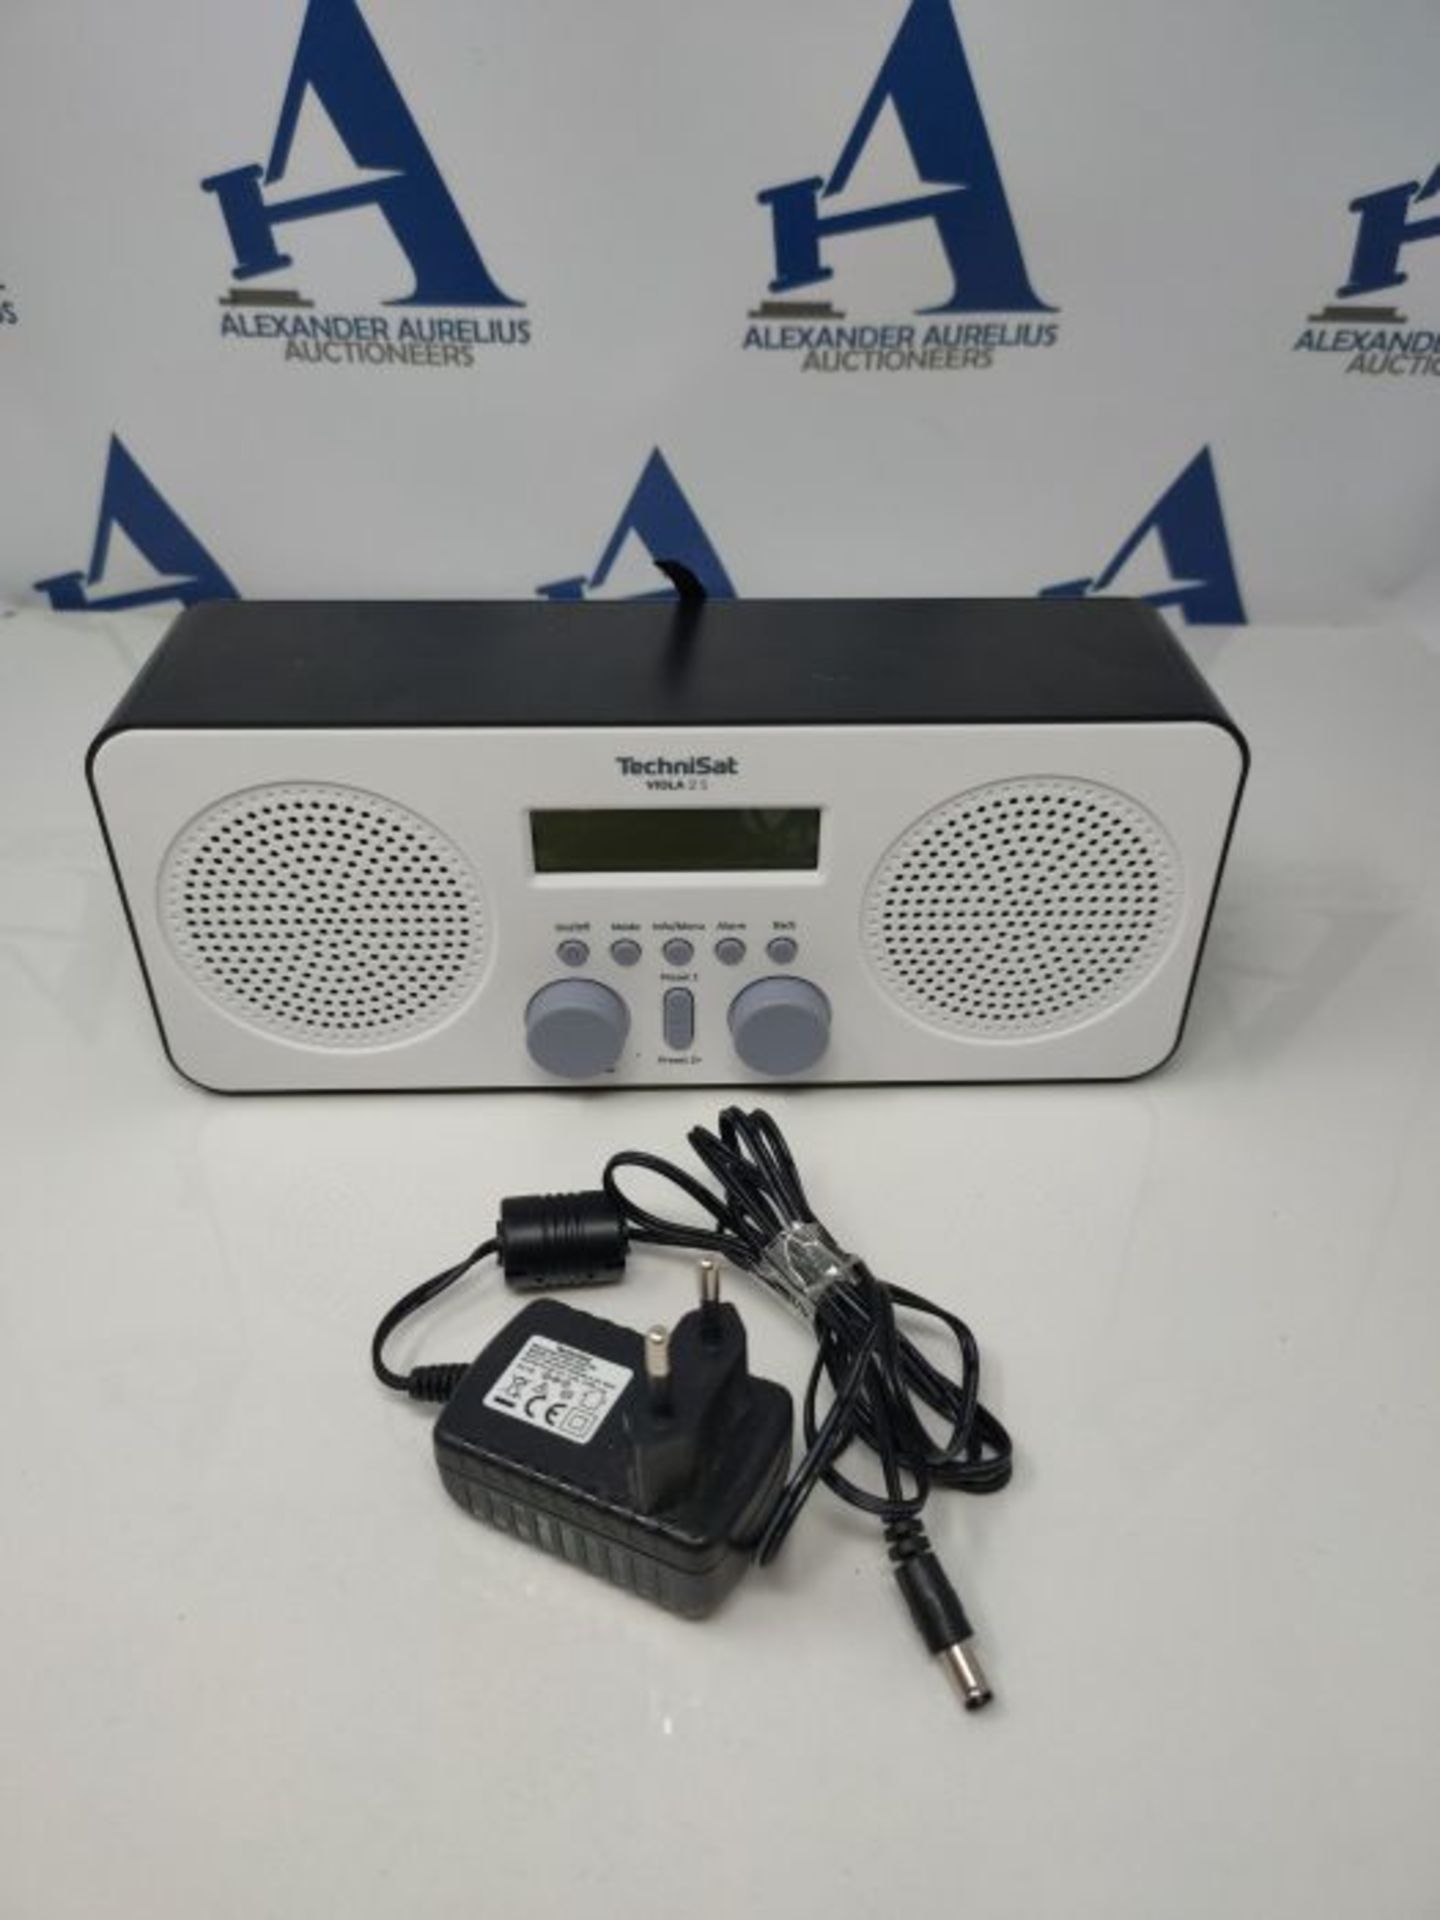 TechniSat VIOLA 2 S - tragbares DAB Radio (DAB+, UKW, Wecker, Stereo Lautsprecher, Kop - Image 3 of 3